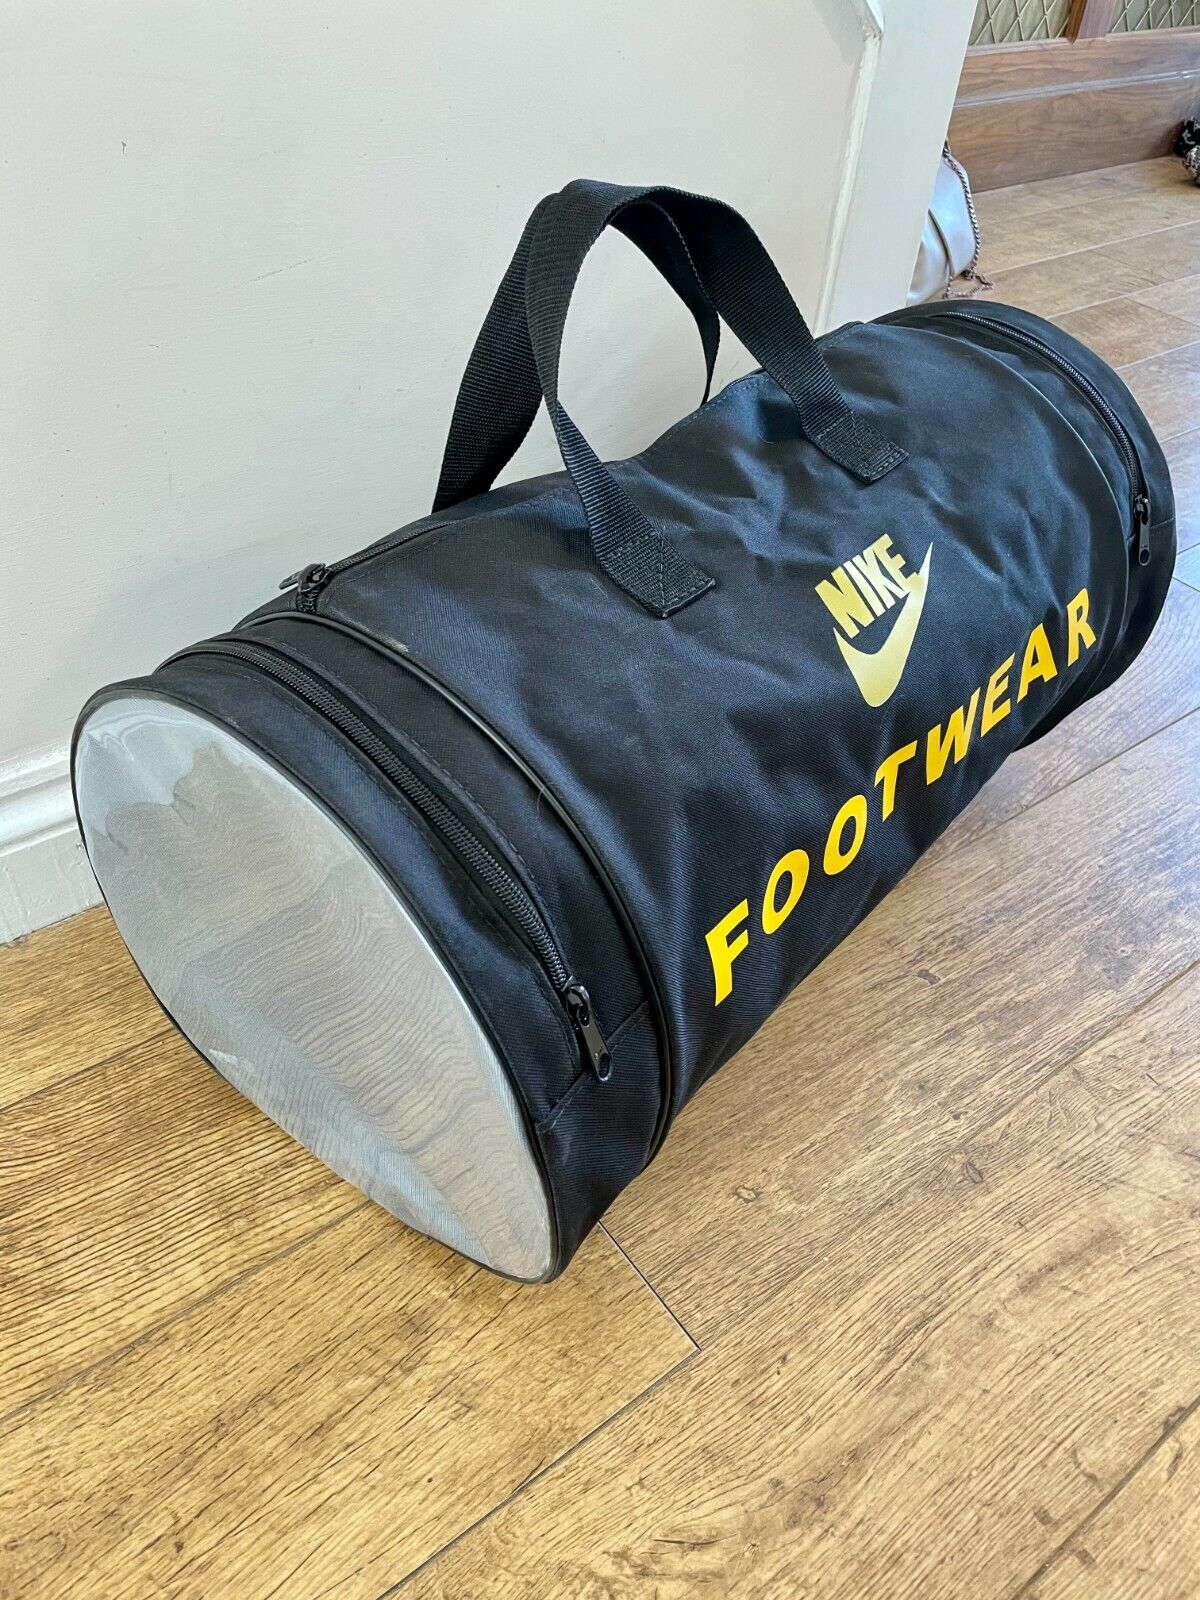 to the Future 2 Footwear Duffle Bag | eBay